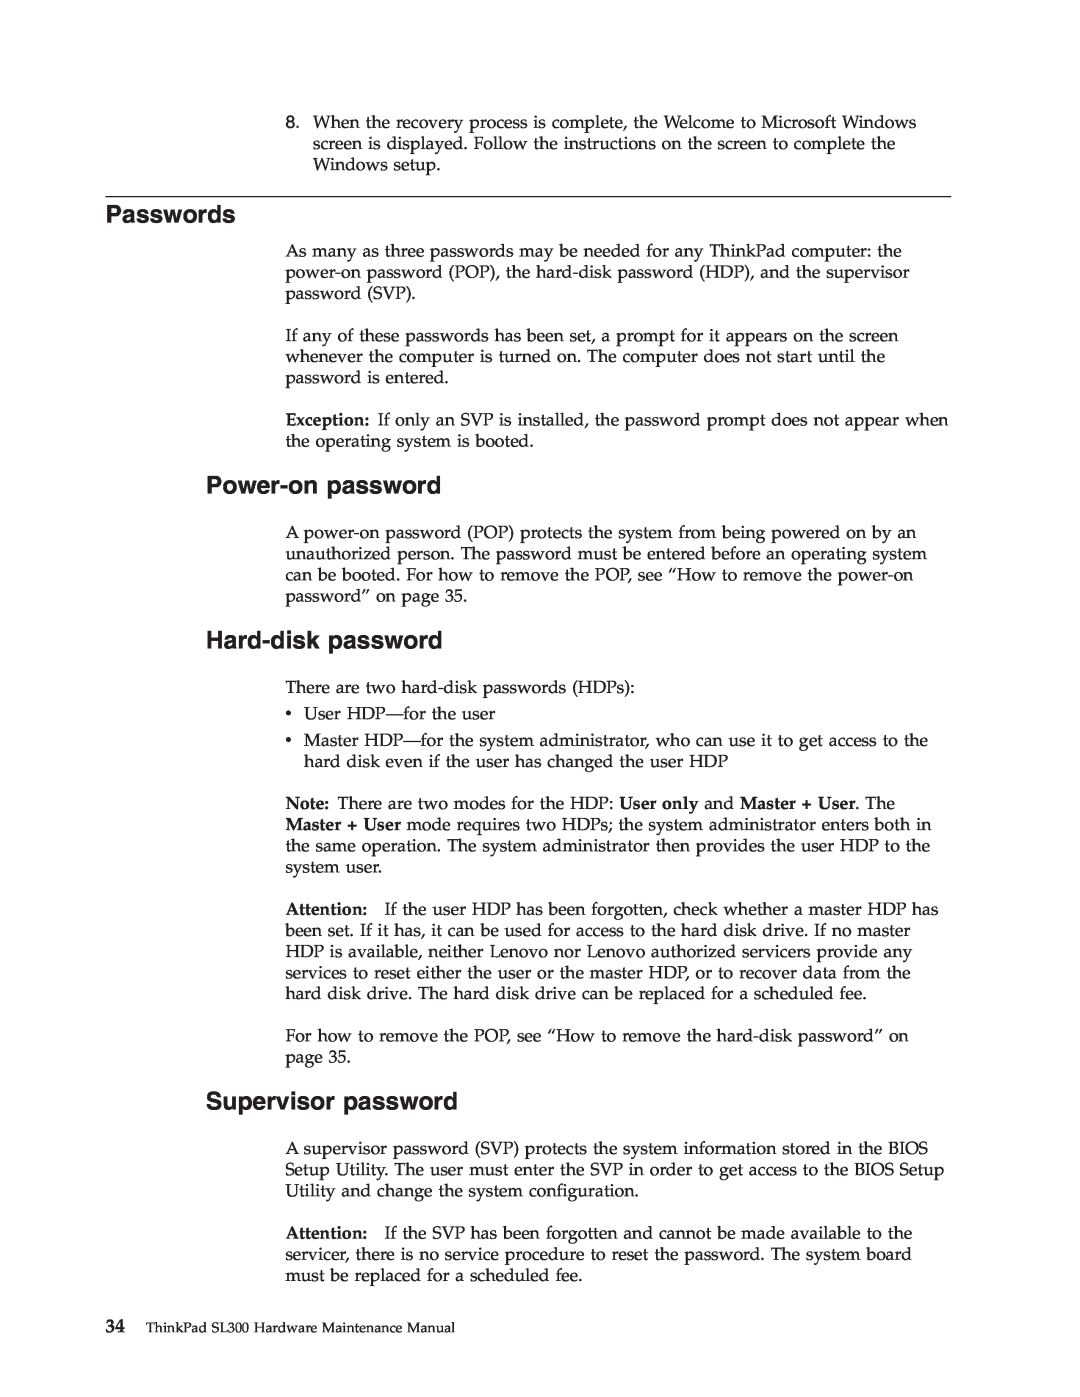 Lenovo SL300 manual Passwords, Power-on password, Hard-disk password, Supervisor password 